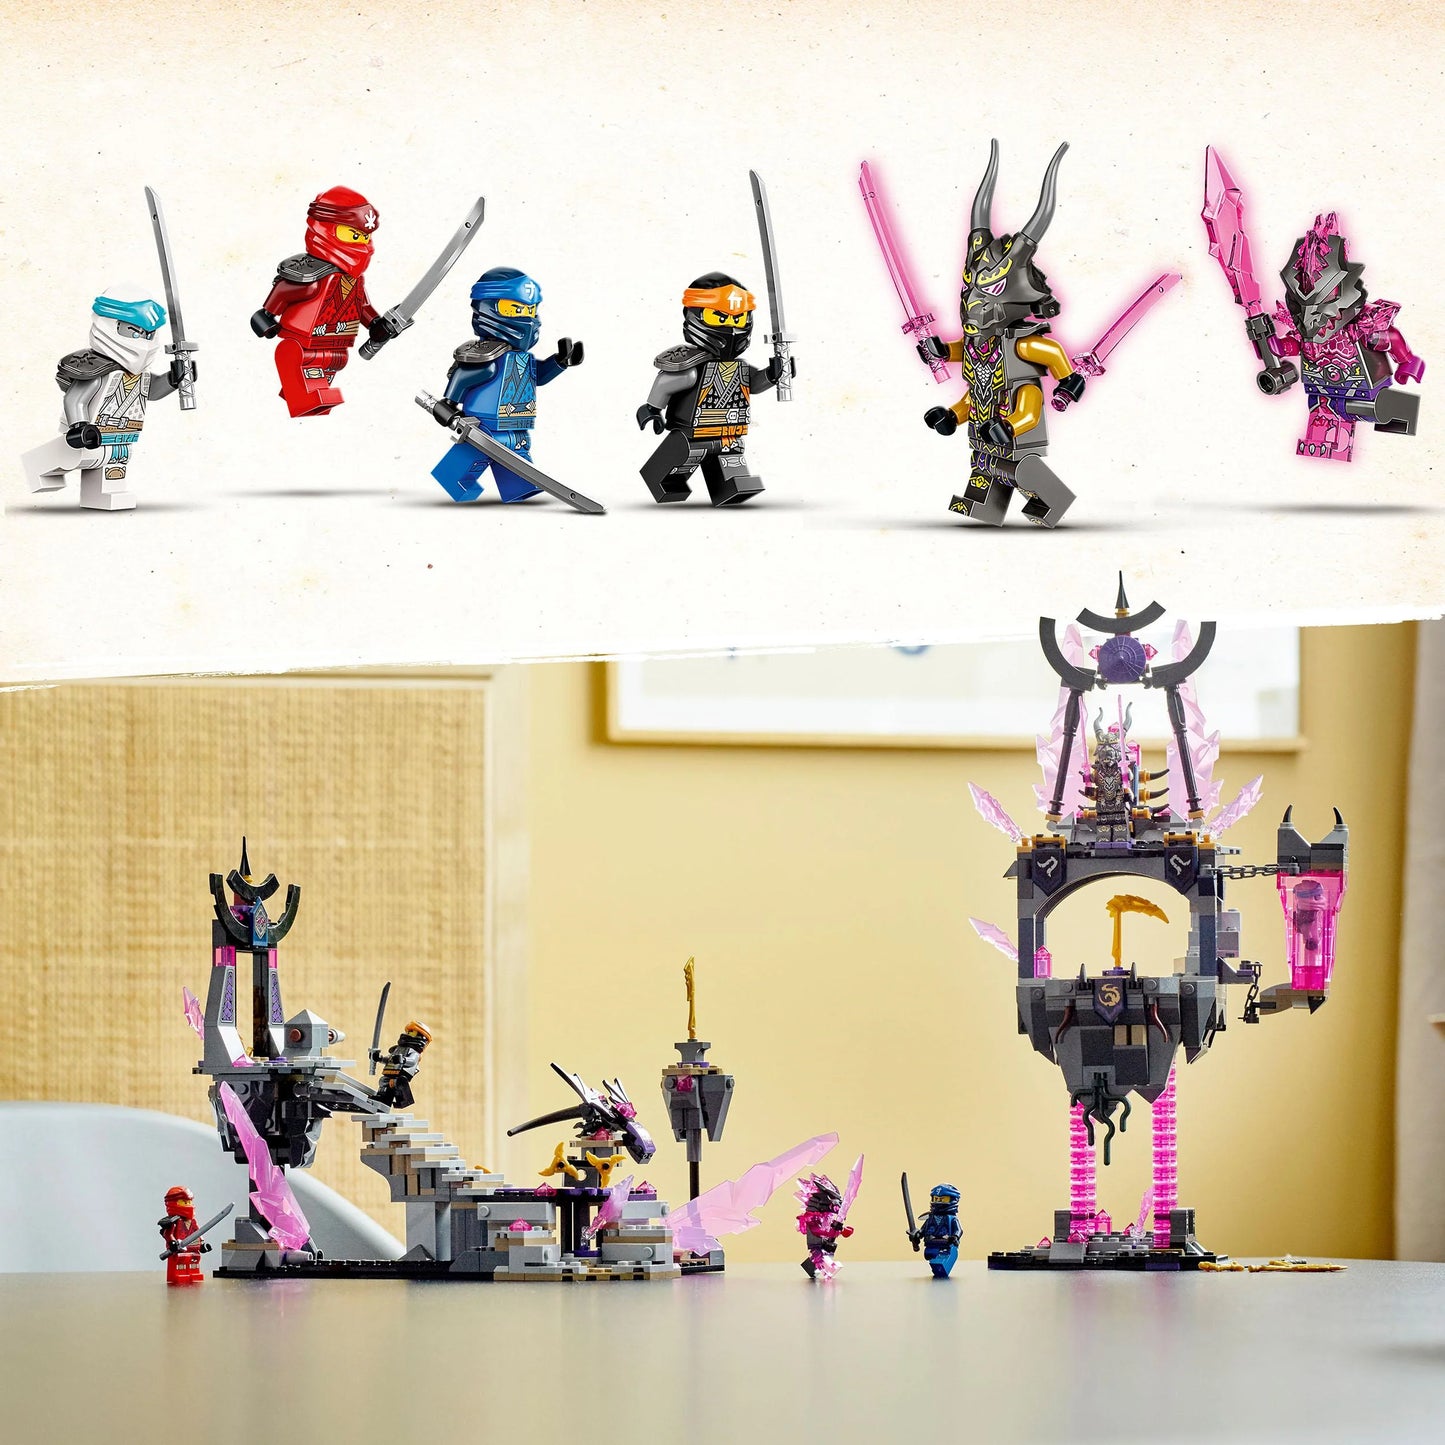 Tempel van de Kristalkoning-LEGO Ninjago